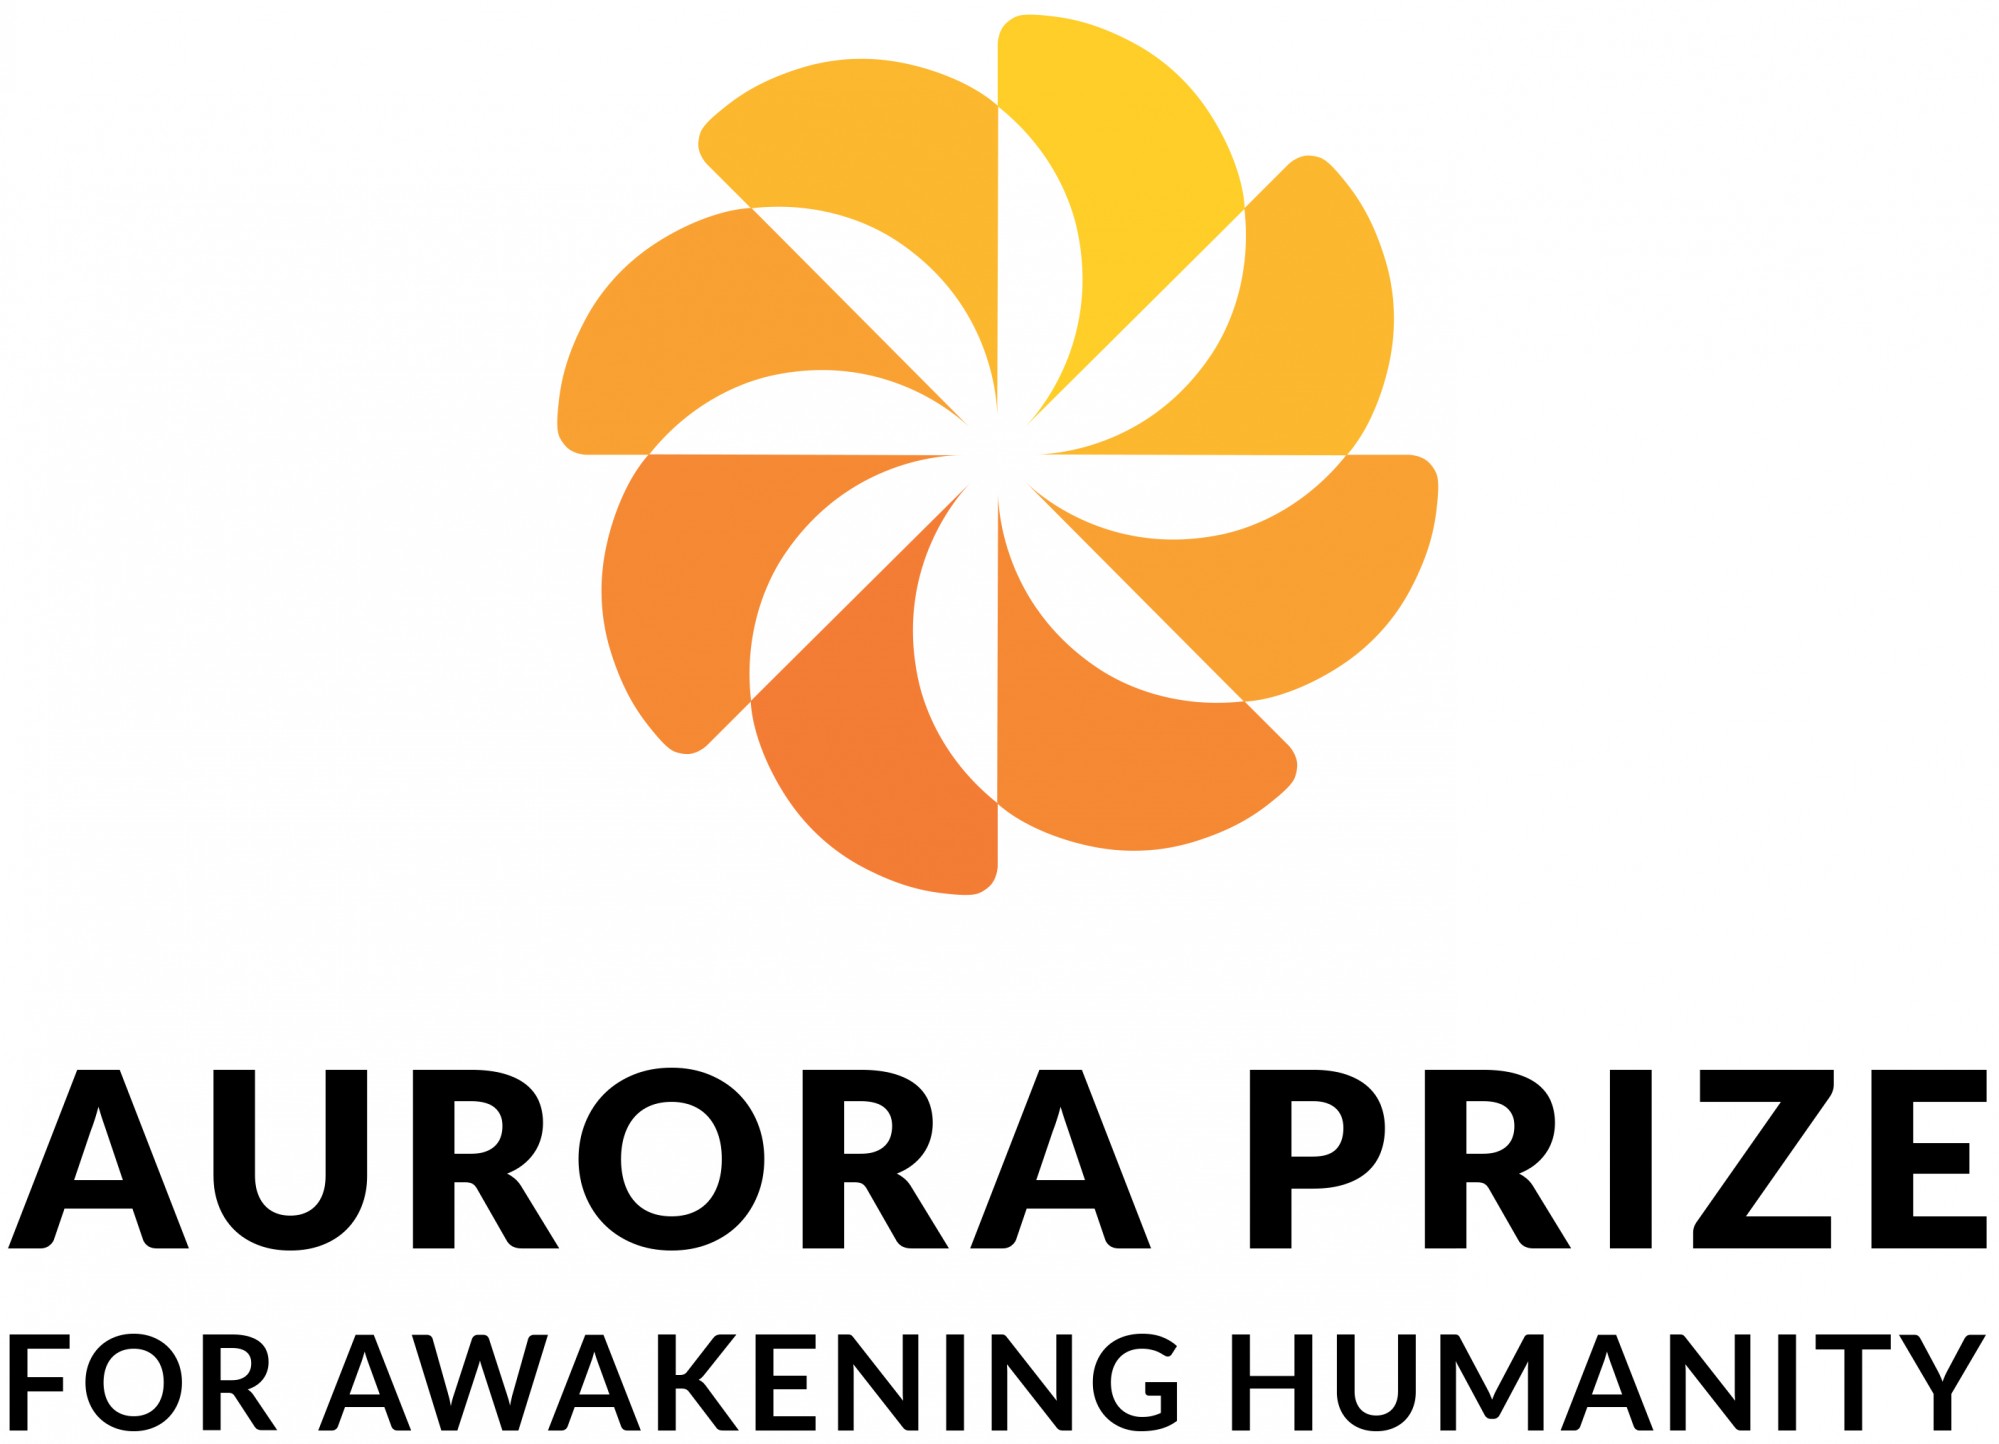  prize aurora  idea   